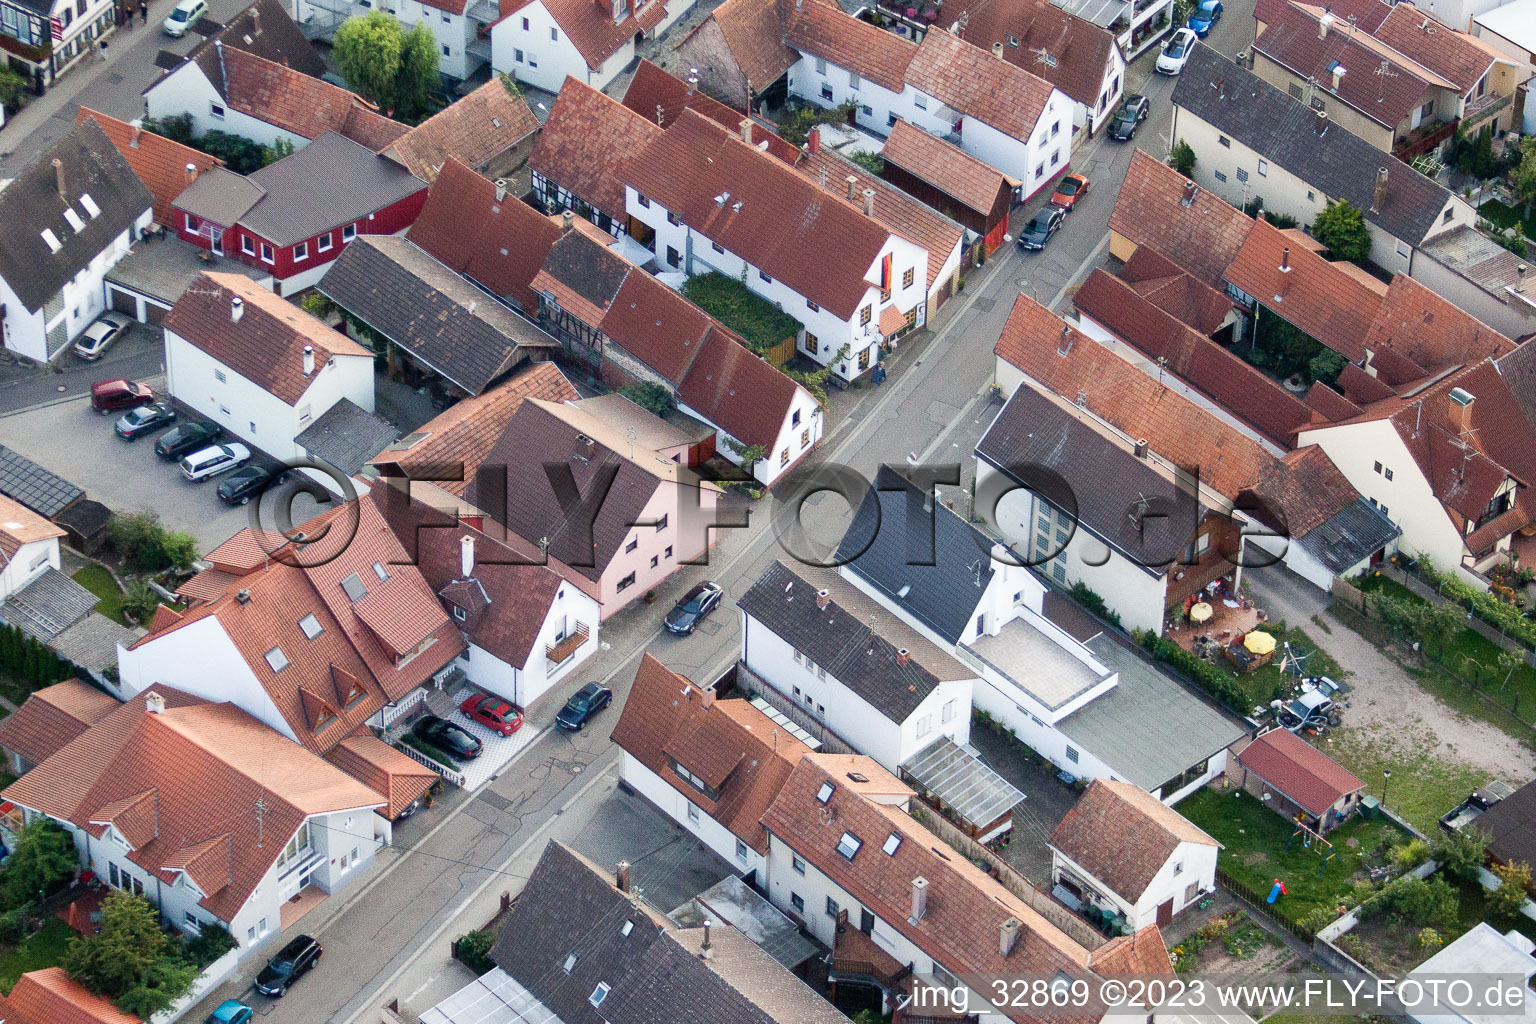 Aerial view of Juiststraße, Zum Schloddrer restaurant in Kandel in the state Rhineland-Palatinate, Germany